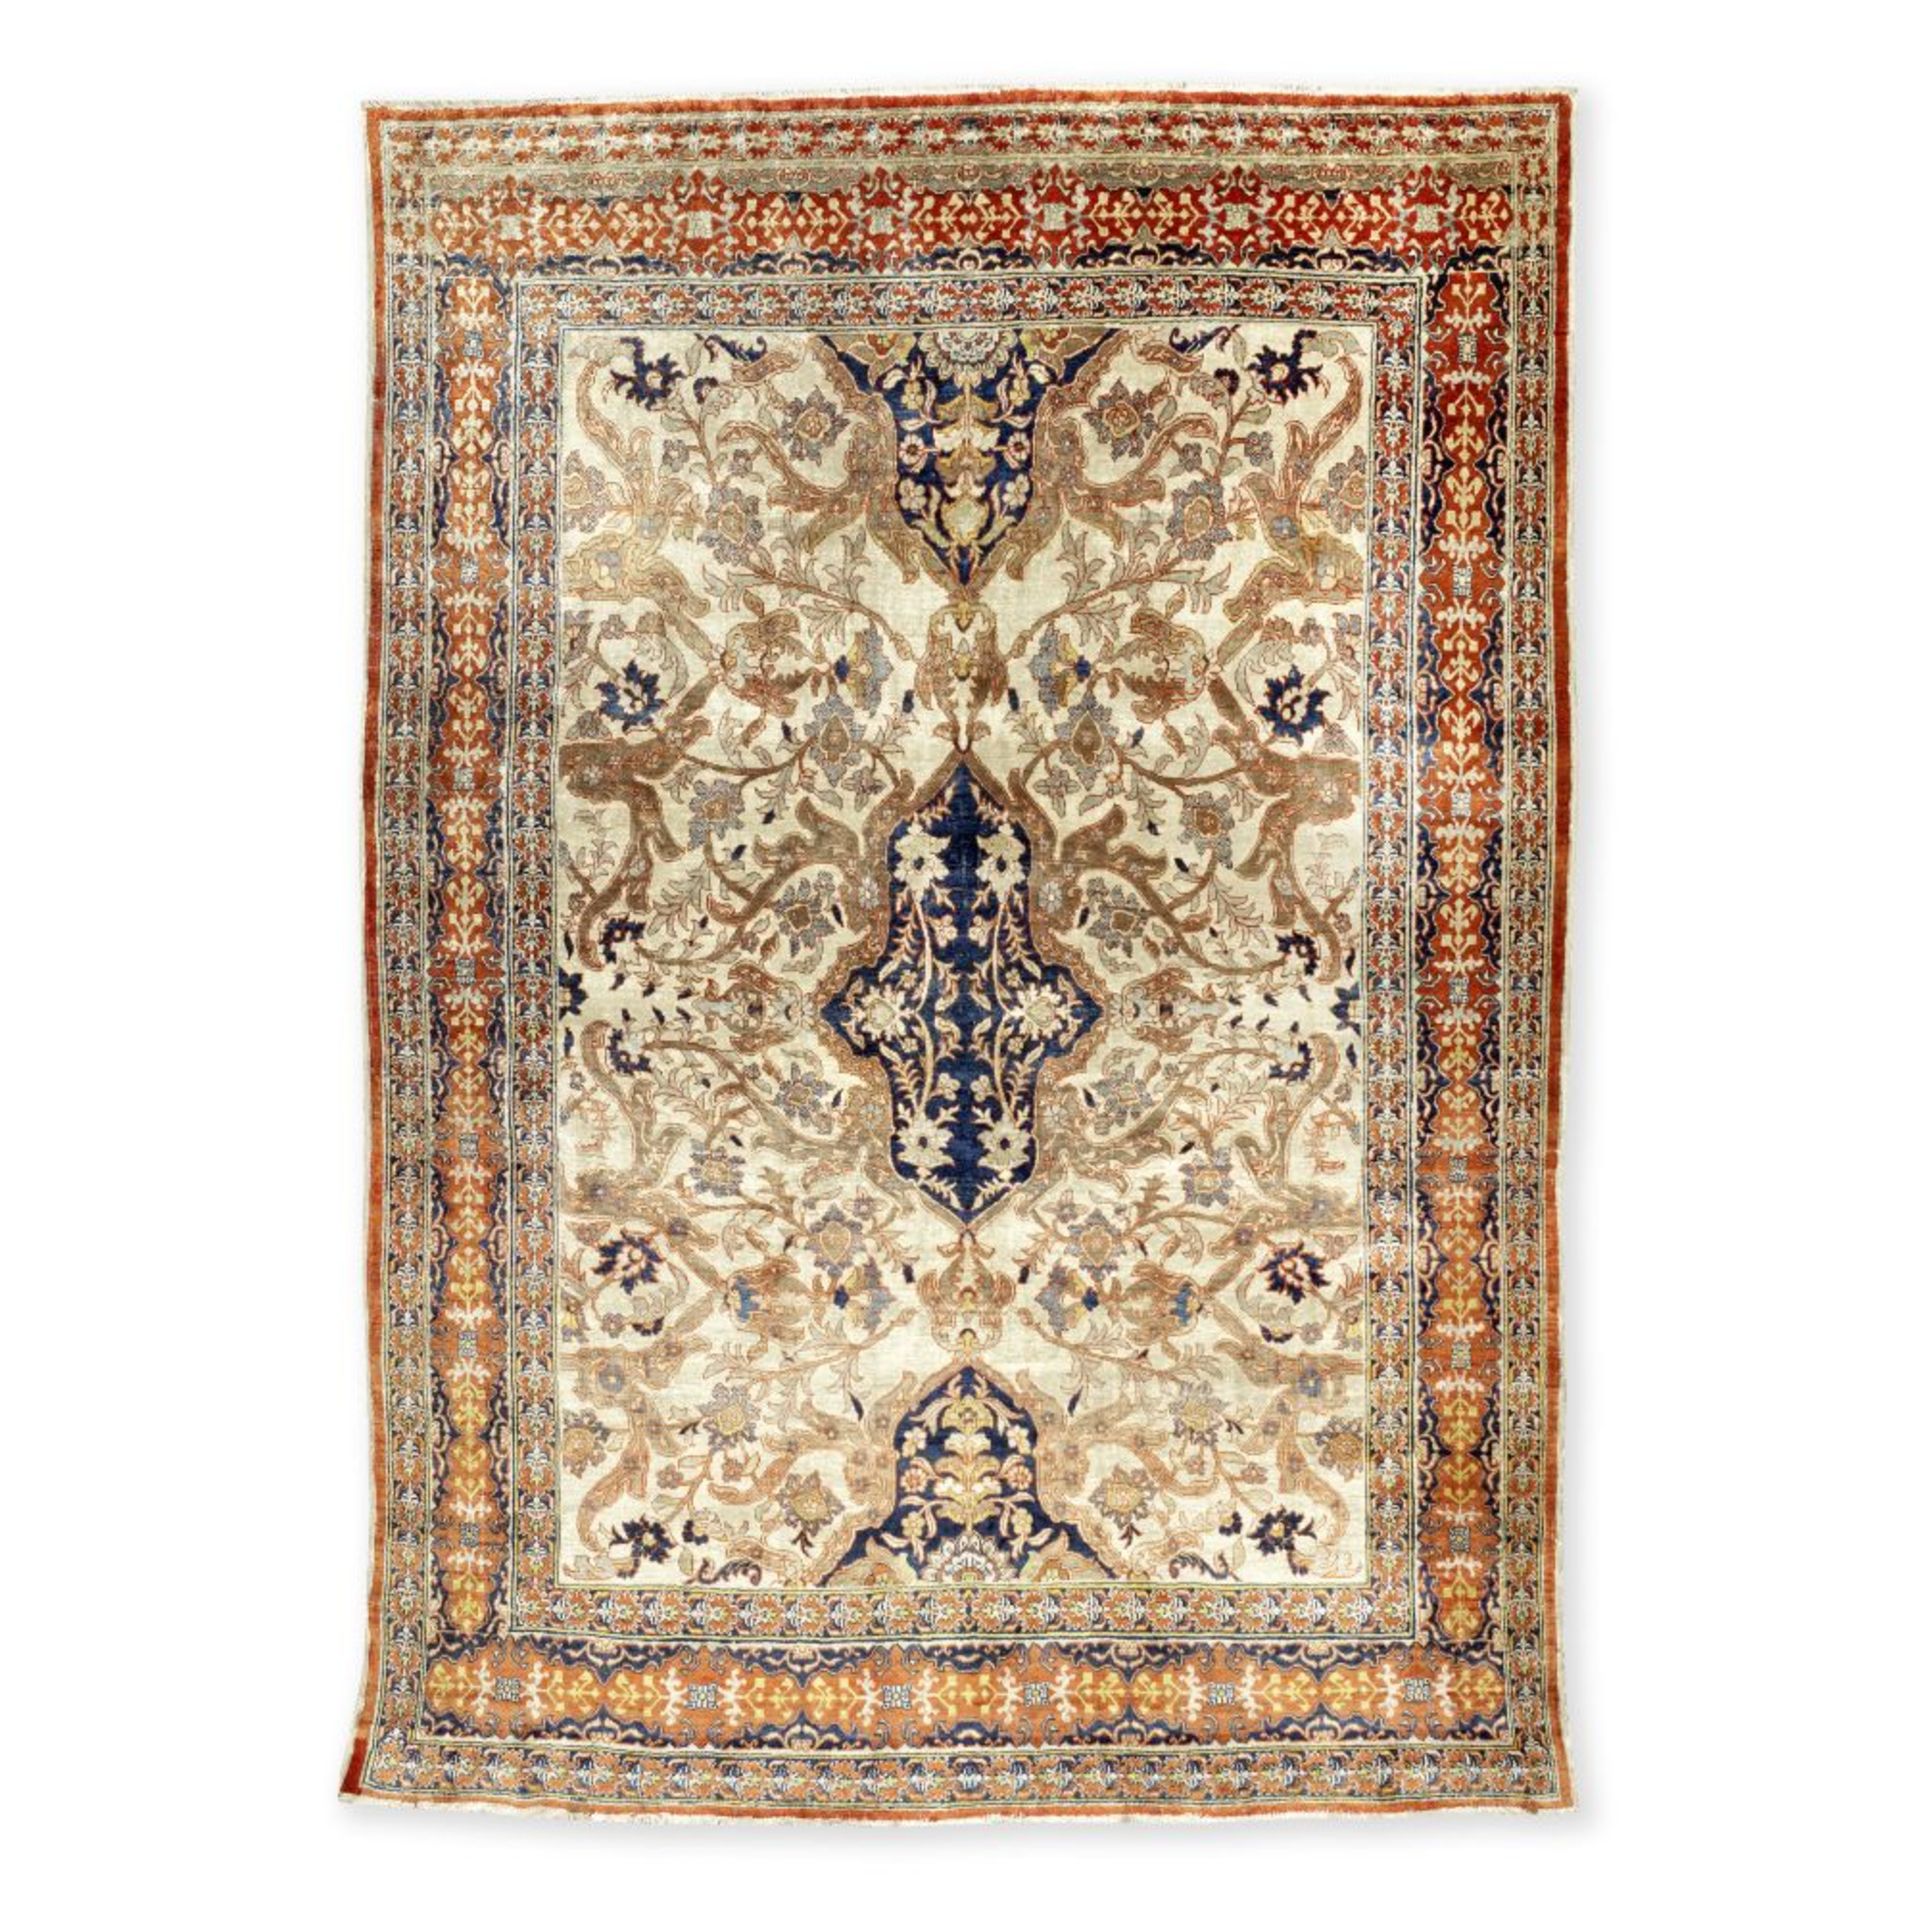 A striking silk Heriz Carpet North West Persia, mid to late 19th century 178cm x 140cm